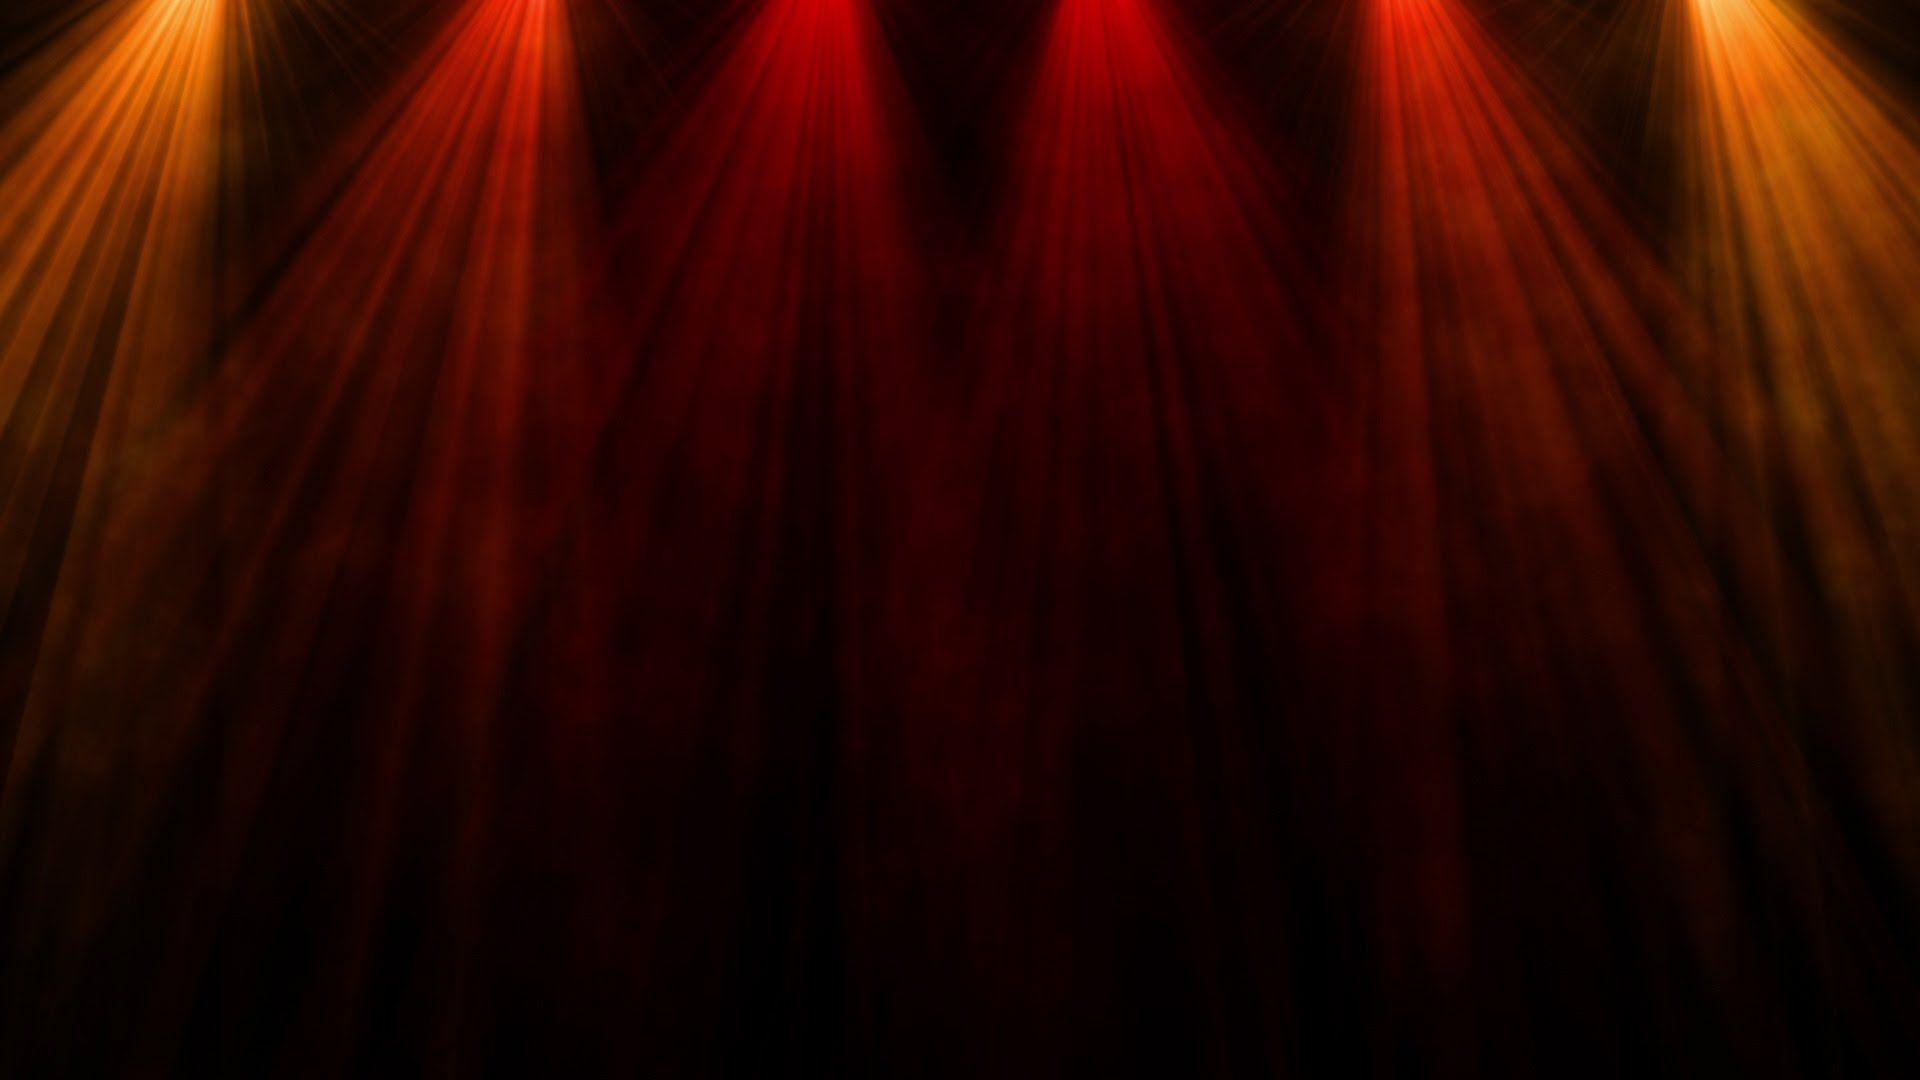 Concert Lights Video Background Loop